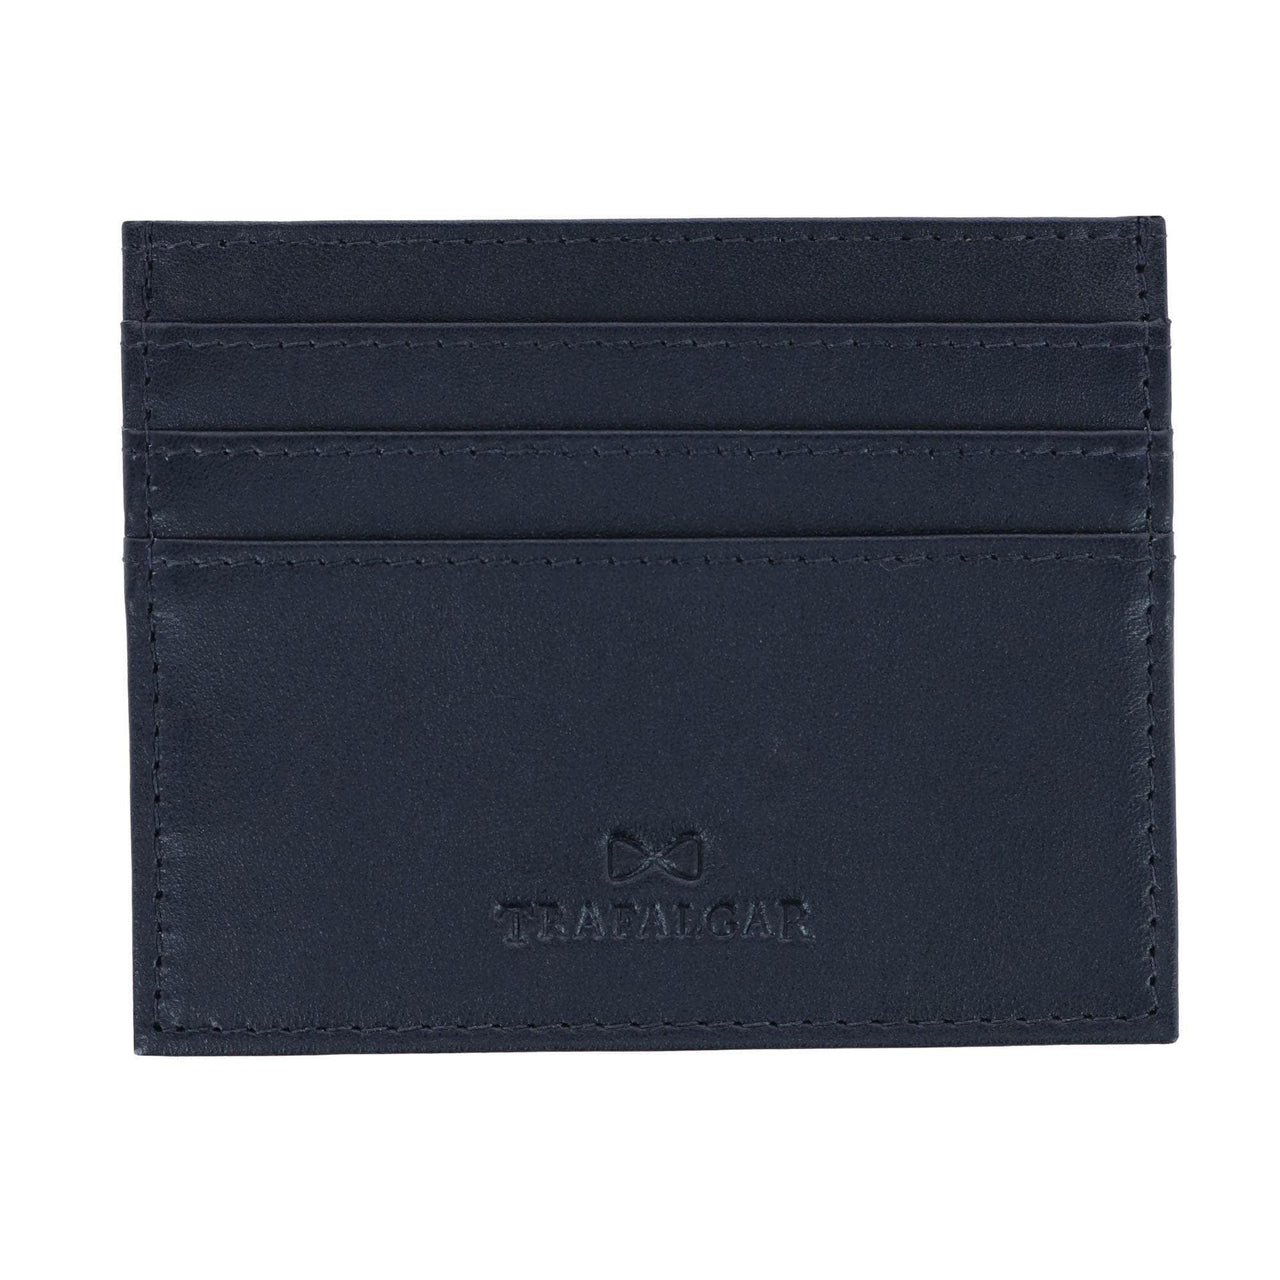 Navigo Card Holder Pass Case - Leather Crust